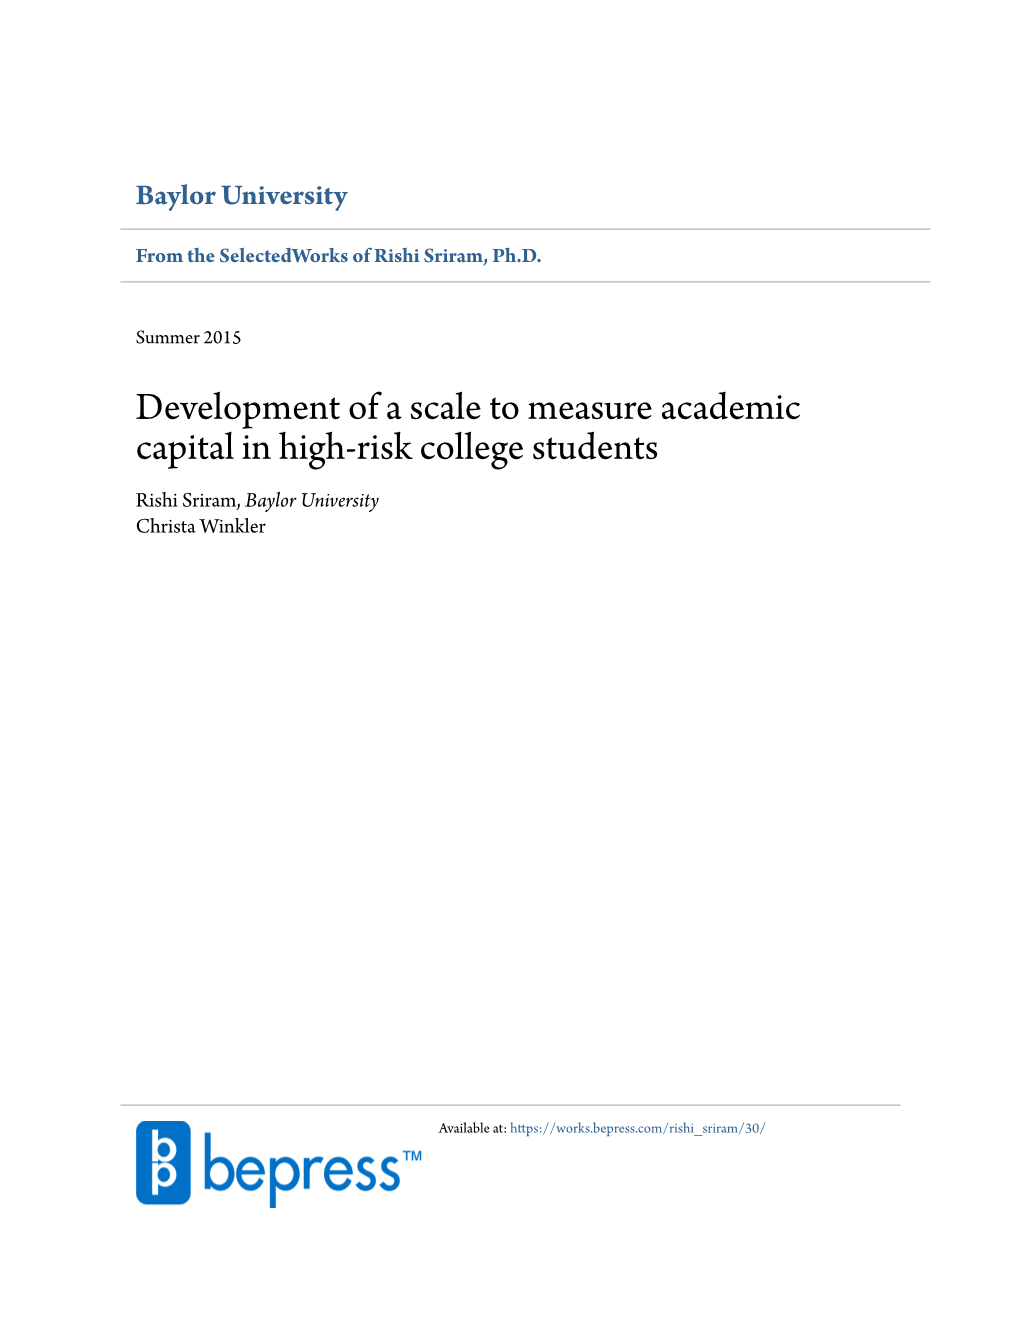 Development of a Scale to Measure Academic Capital in High-Risk College Students Rishi Sriram, Baylor University Christa Winkler